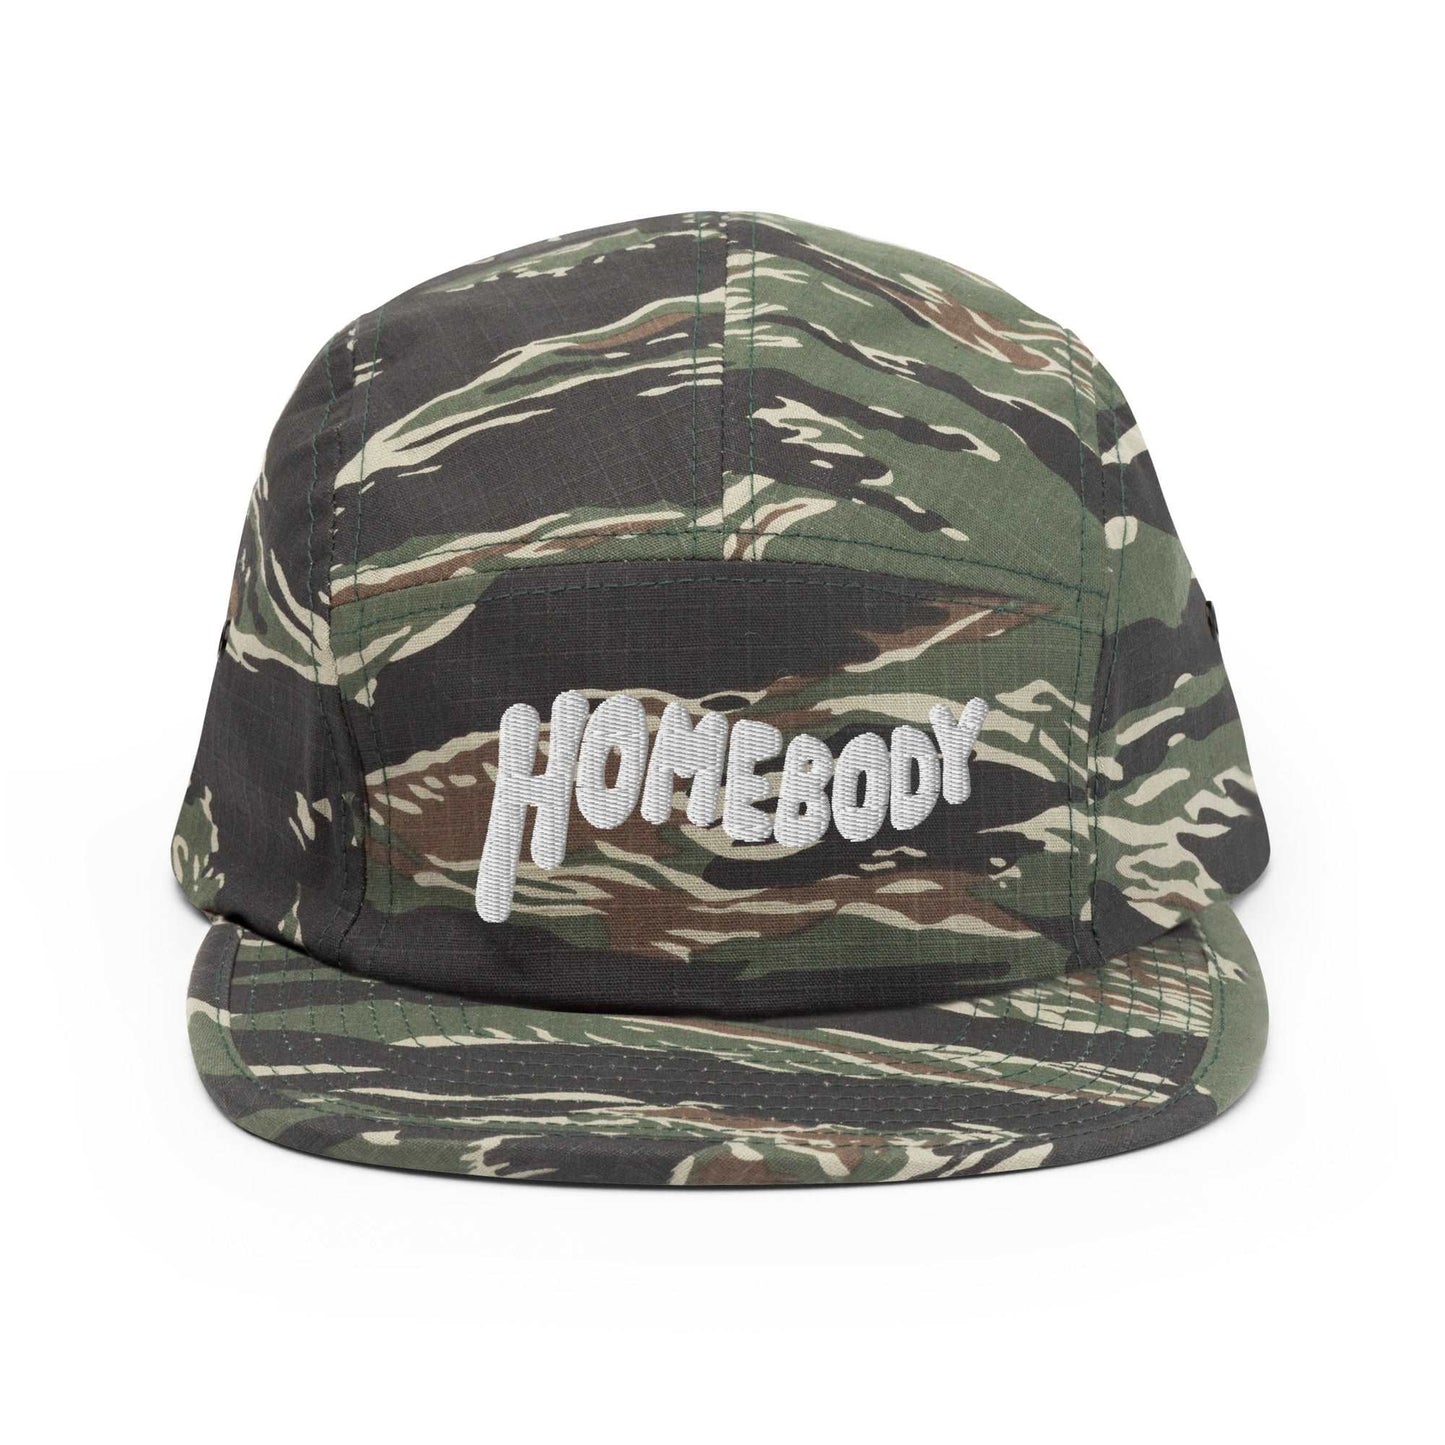 Homebody Hat